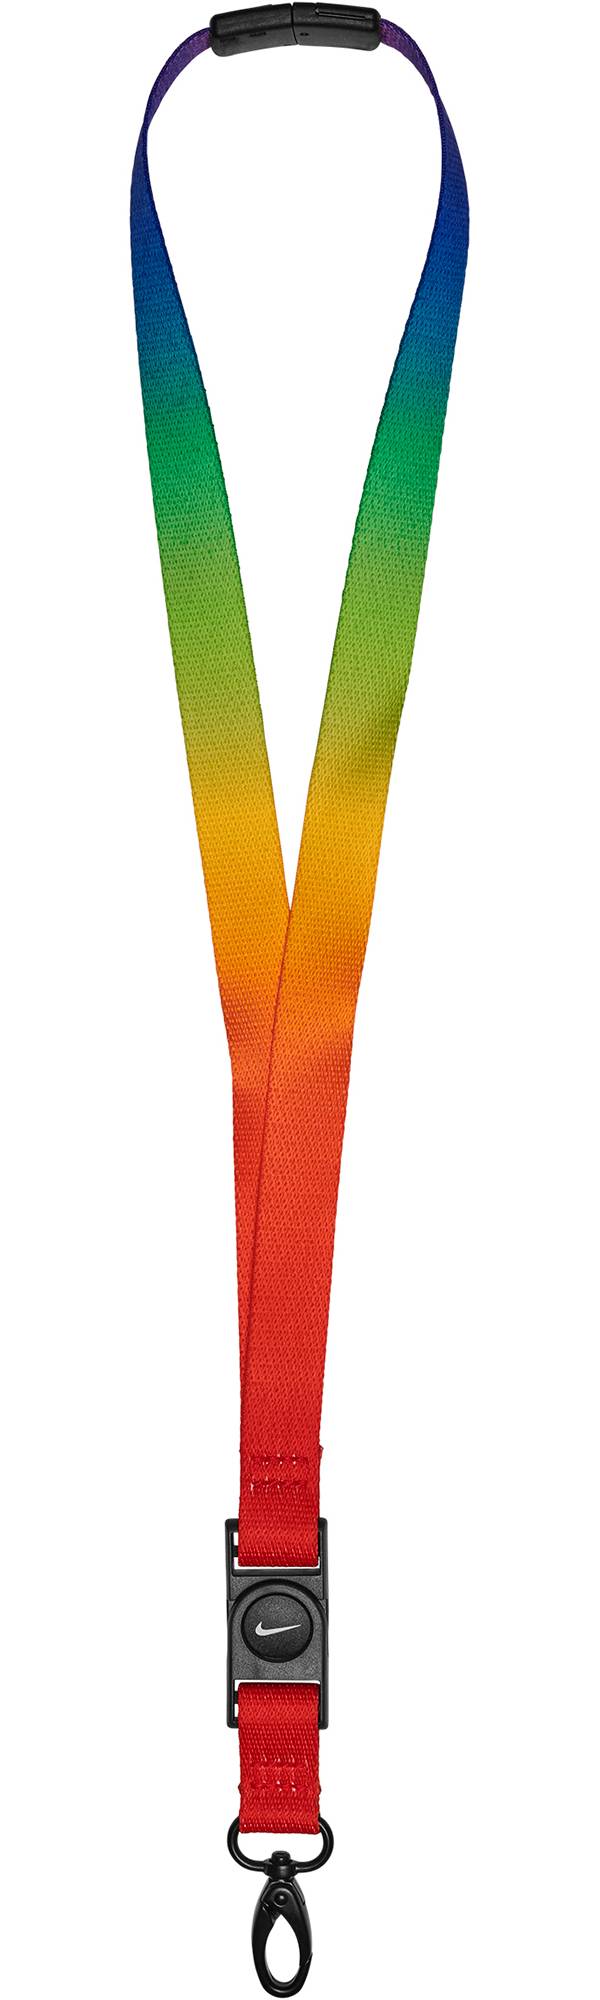 Nike Premium Rainbow Fade Lanyard product image